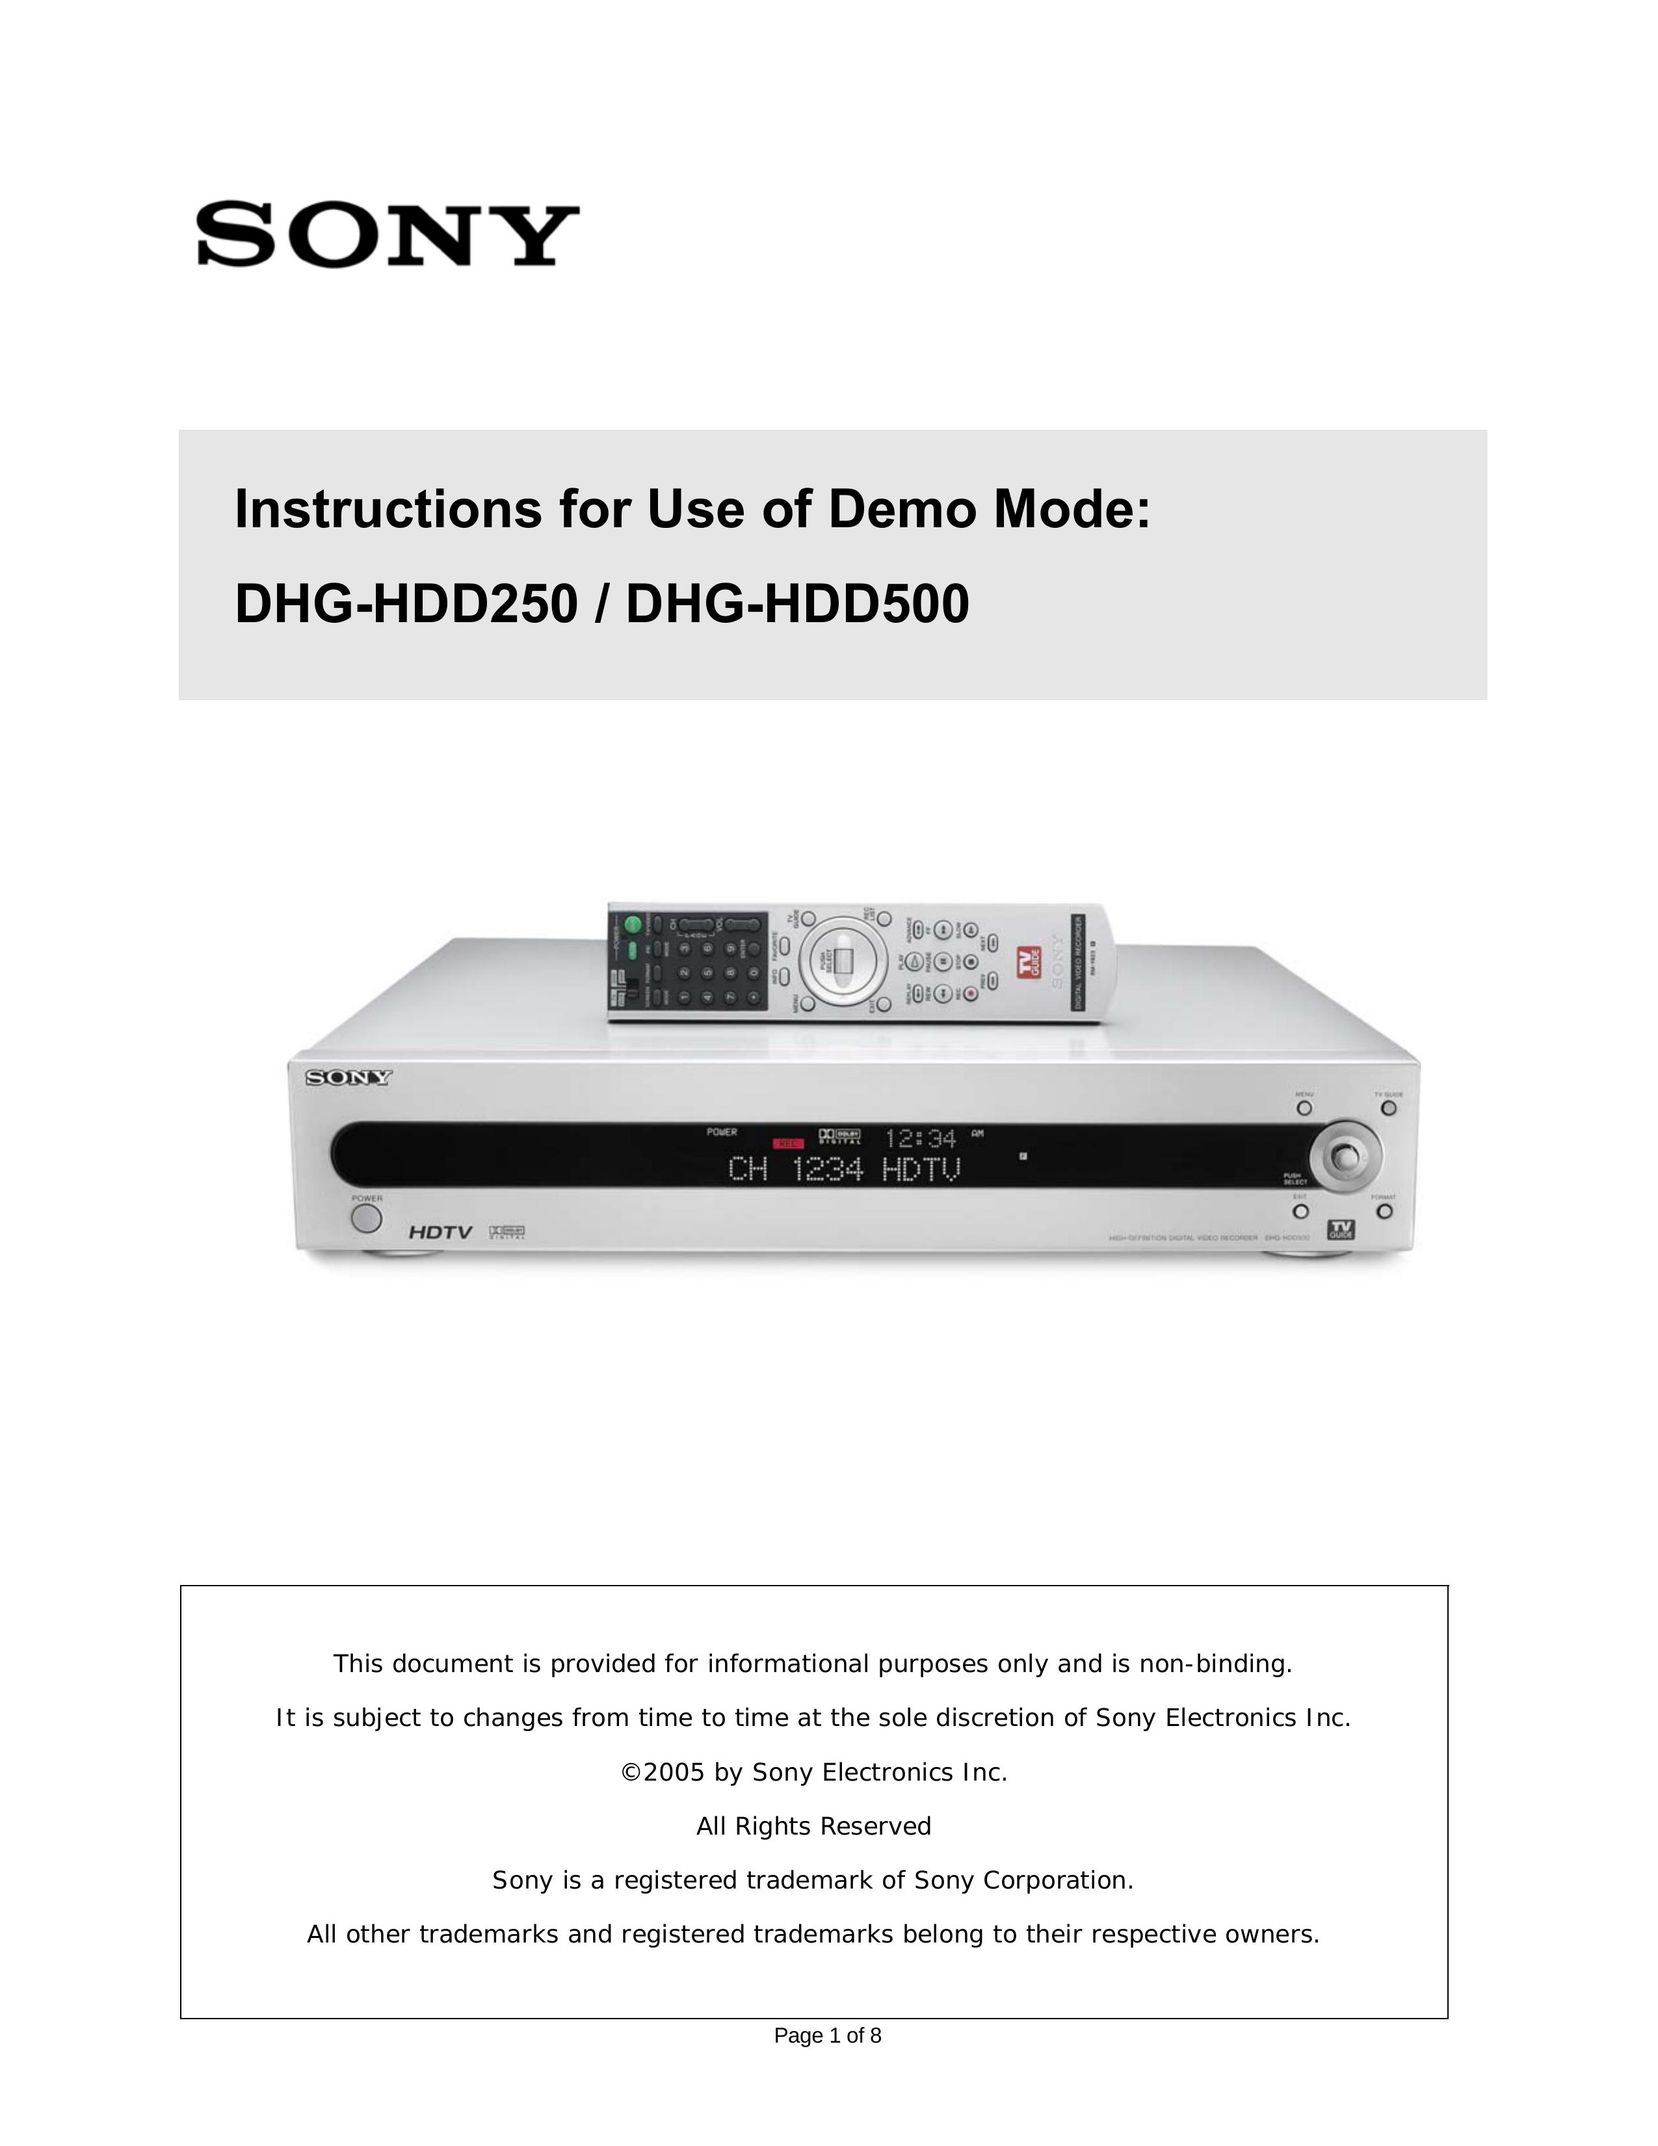 Sony DHG-HDD250 Blender User Manual